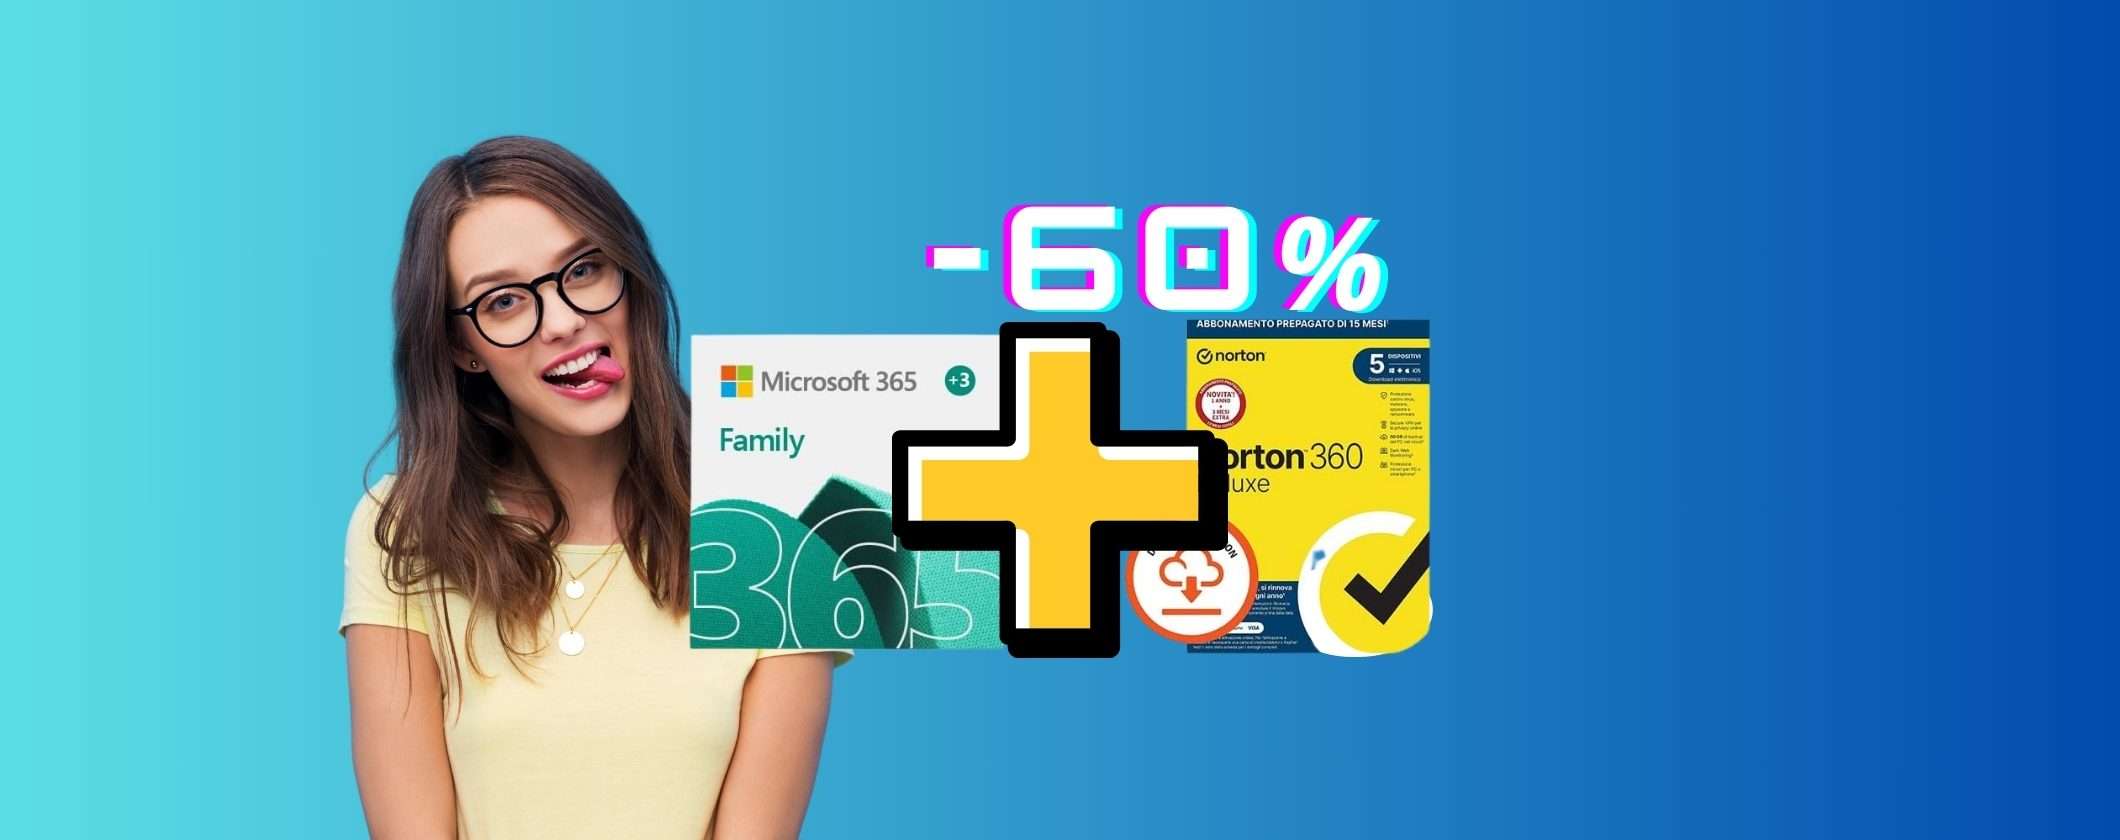 Microsoft 365 Family + Norton 360 Deluxe: 15 mesi a -60%